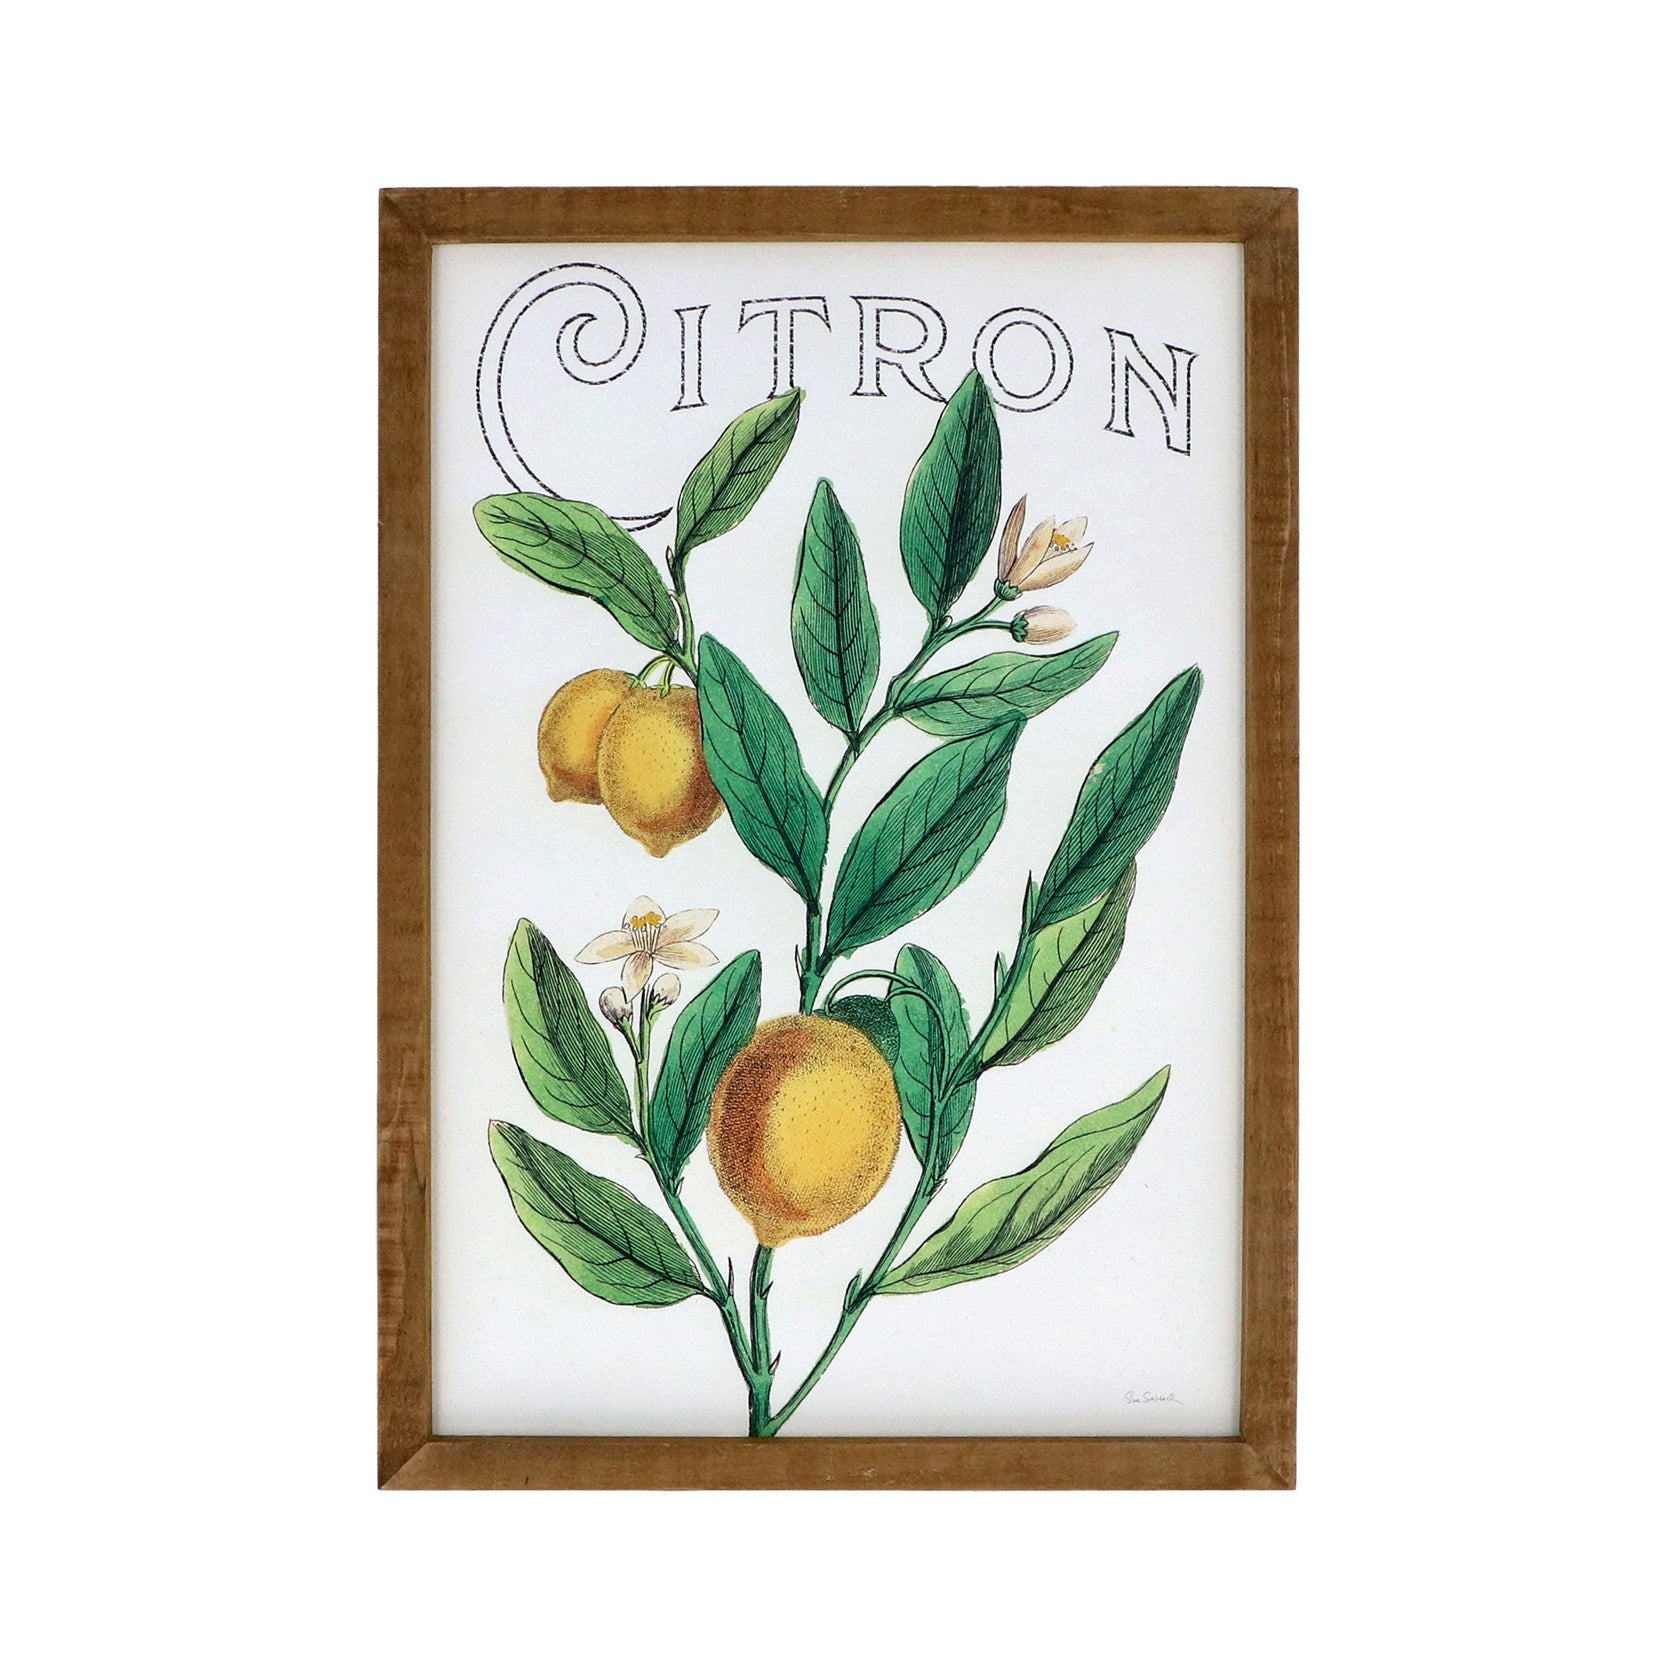 Citron Wall Art - Lemon Tree